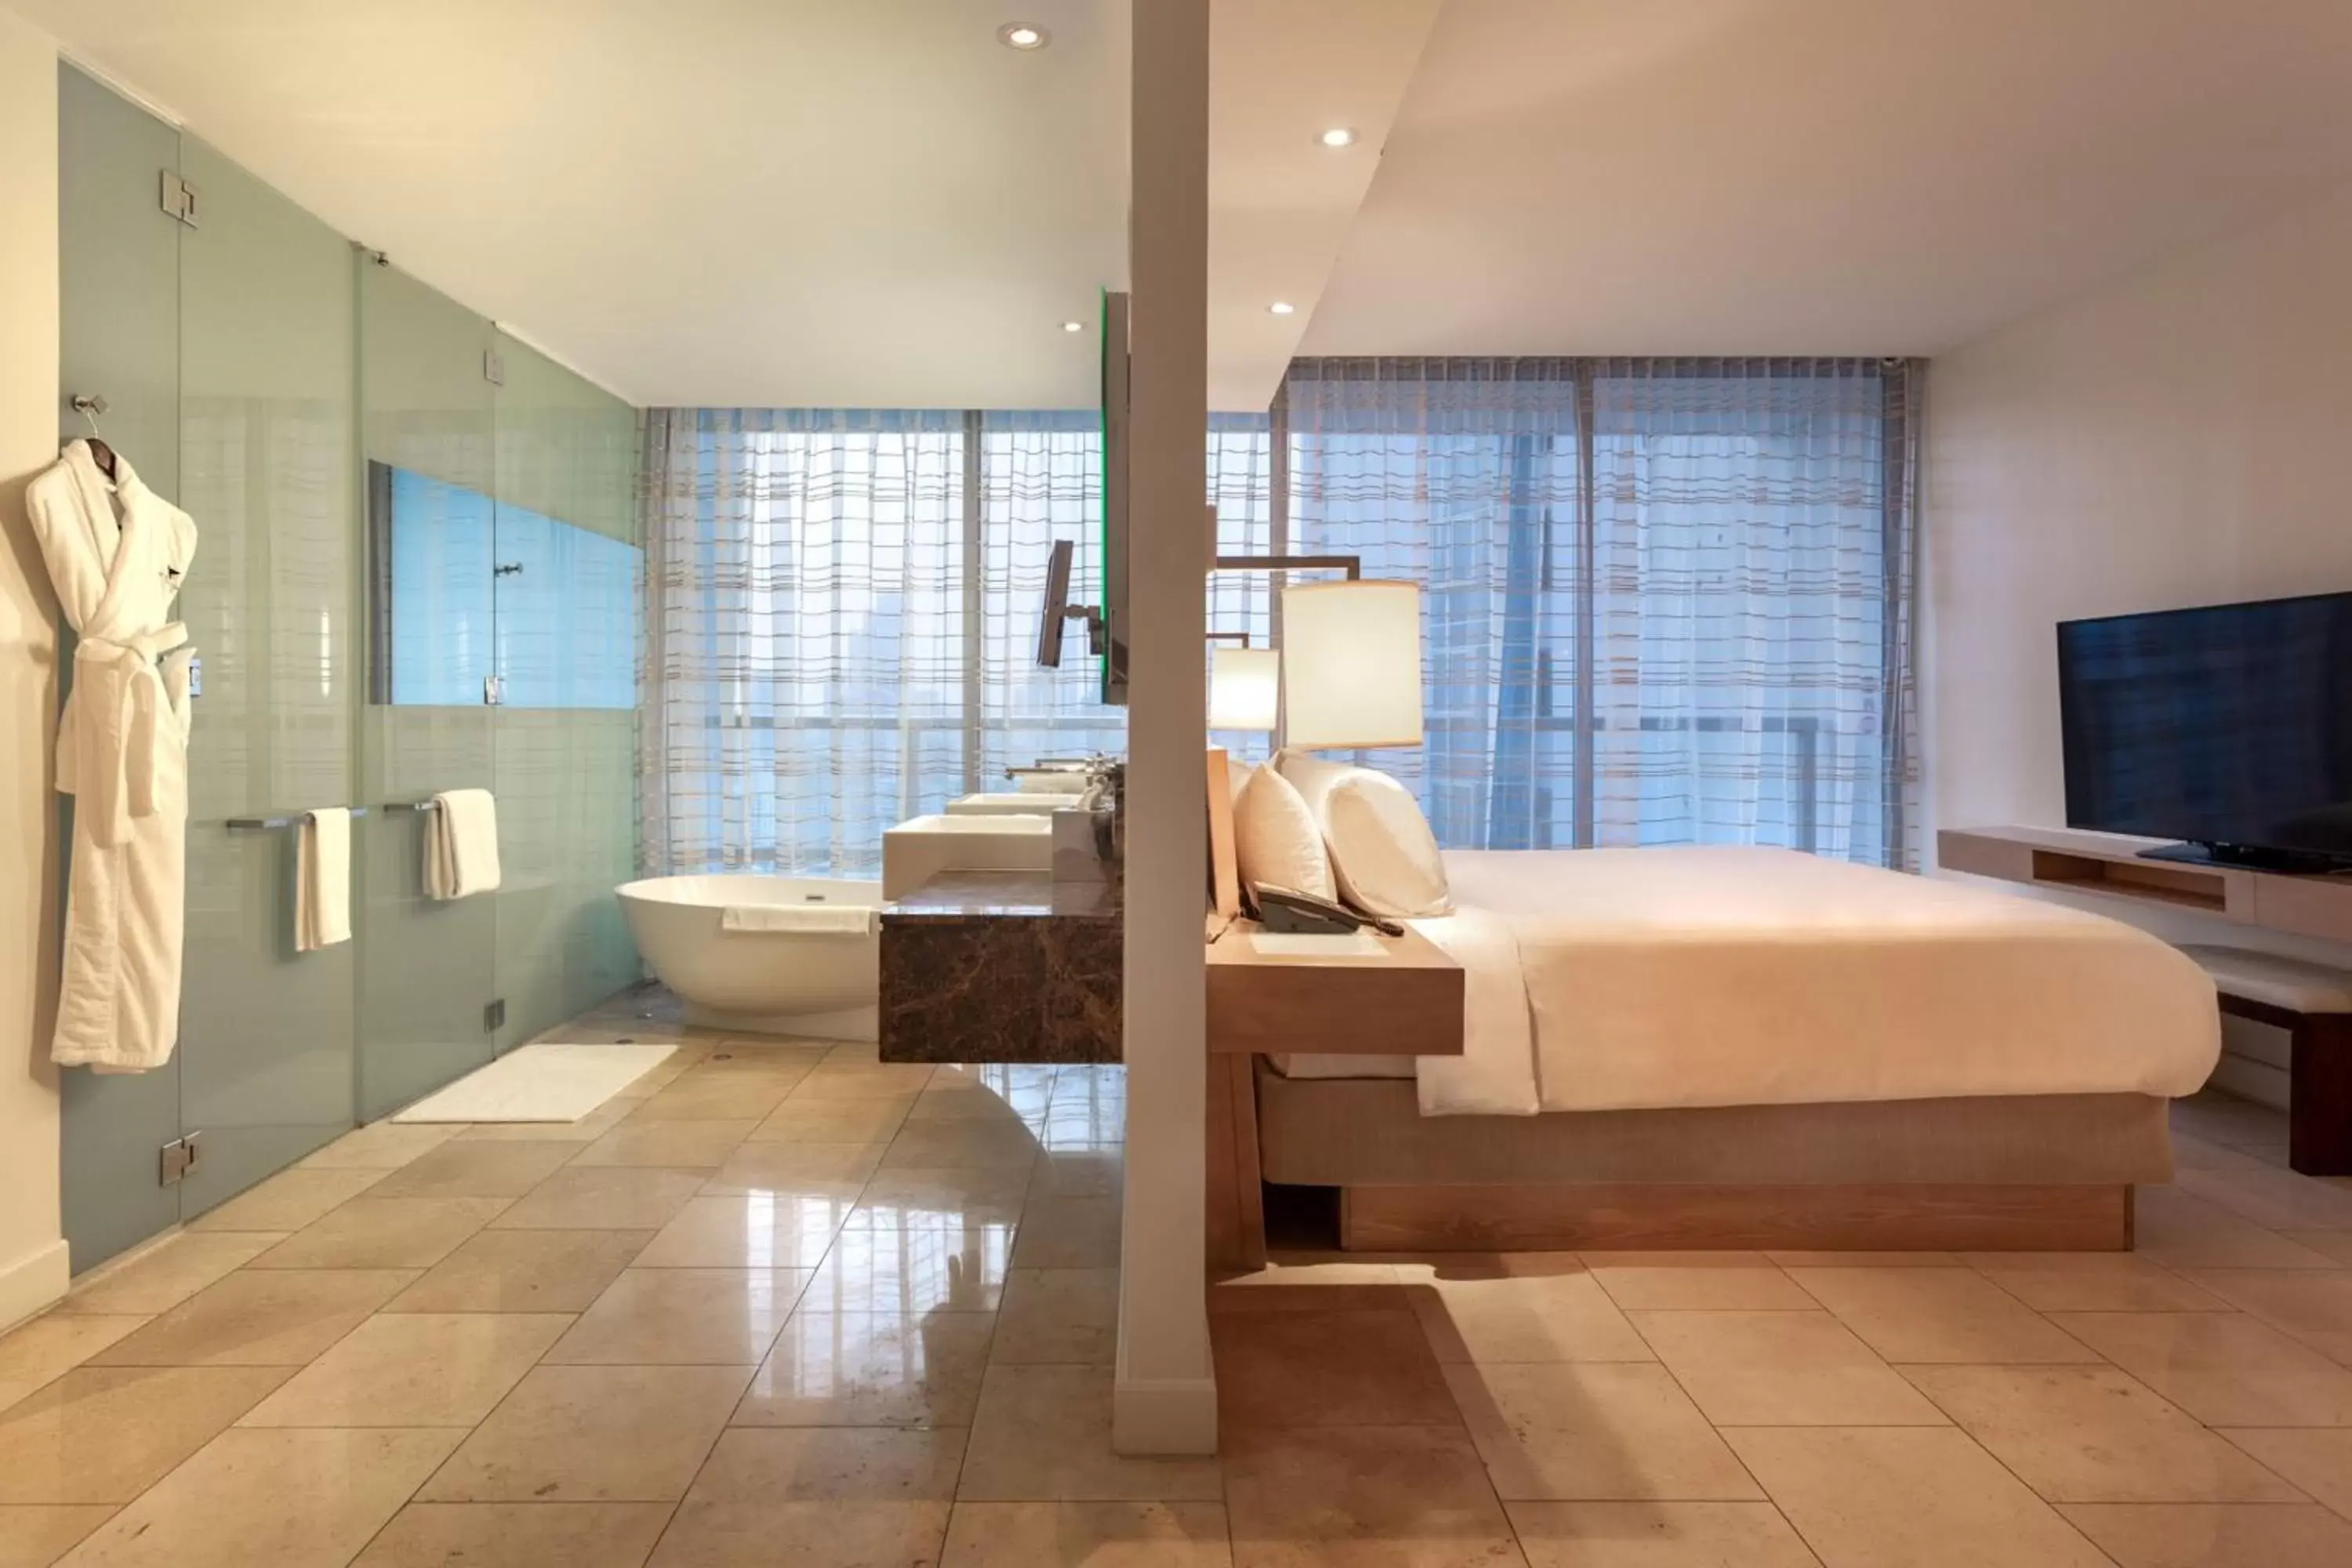 Photo of the whole room, Bathroom in JW Marriott Panama